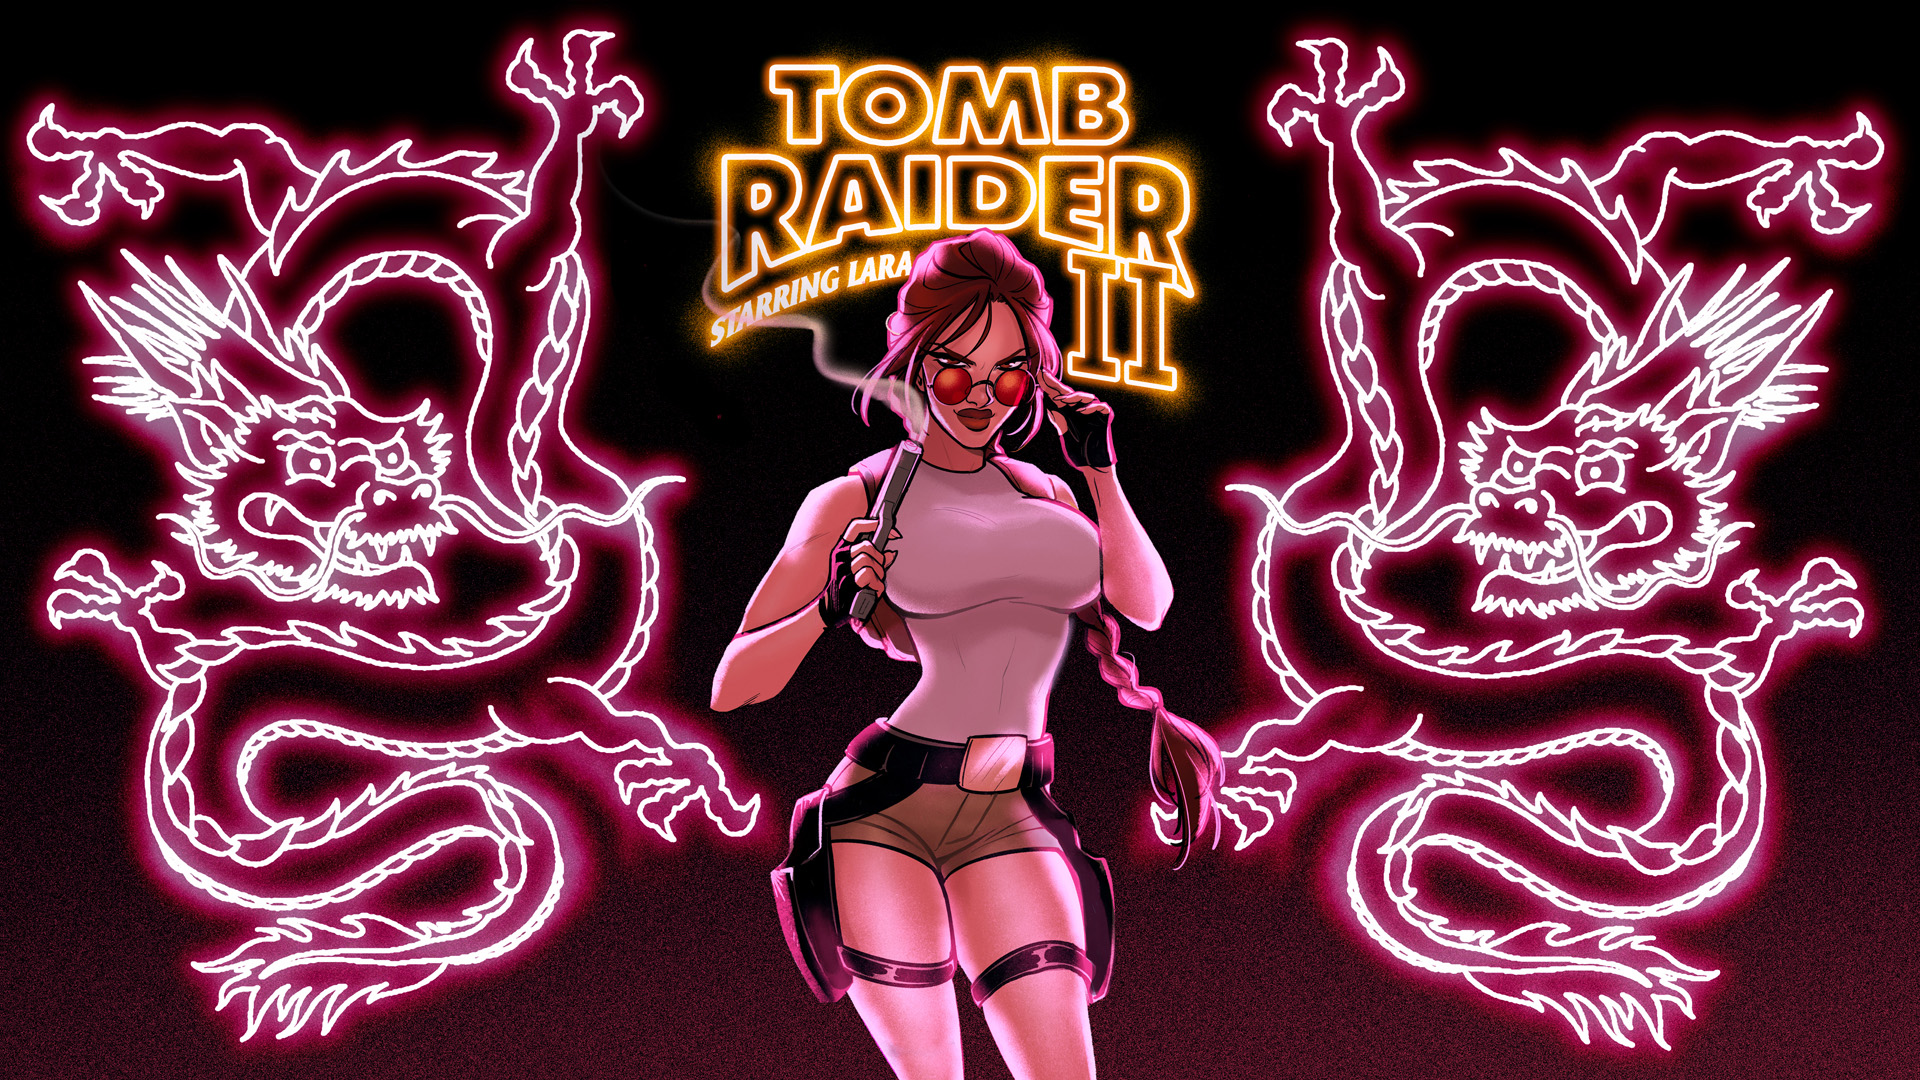 Reimagined Tomb Raider II box art by Babs Tarr